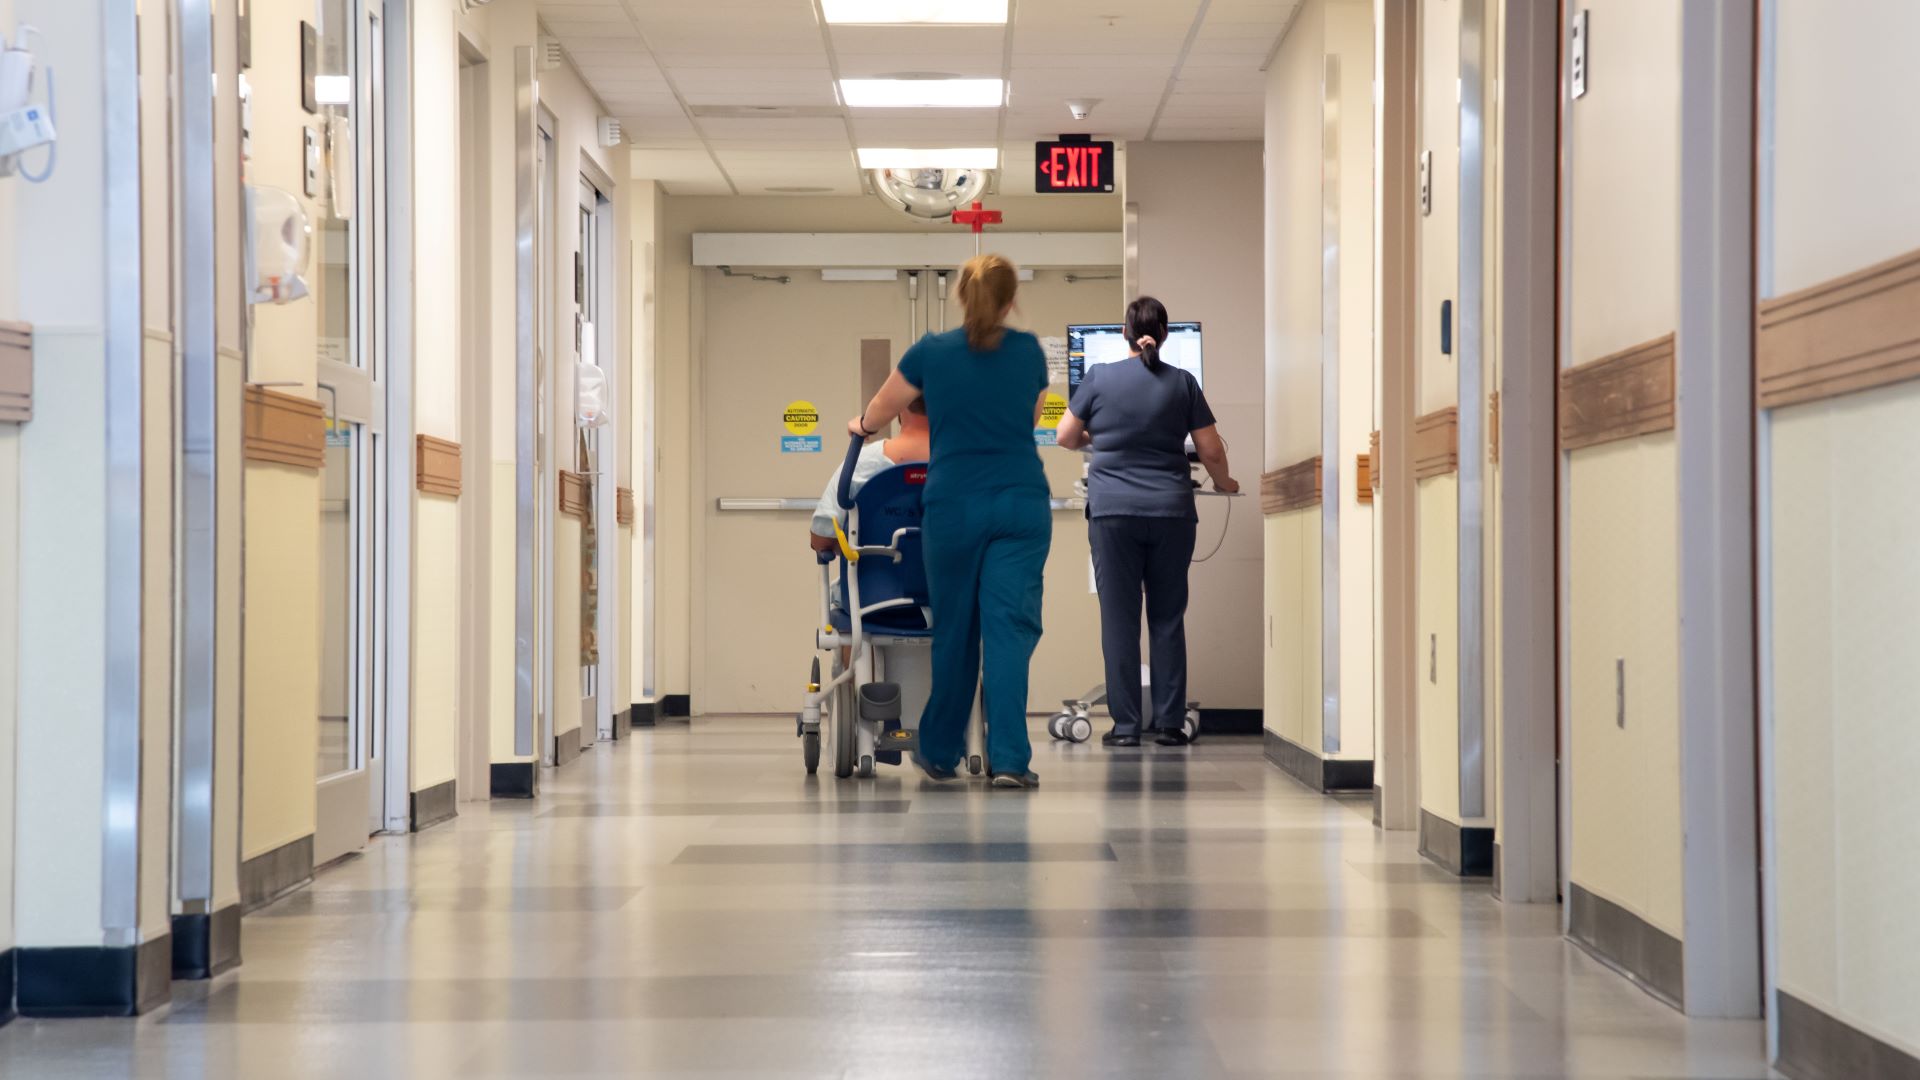 $20,000 signing bonus, anyone? Nursing homes still struggle with staff recruitment, retention